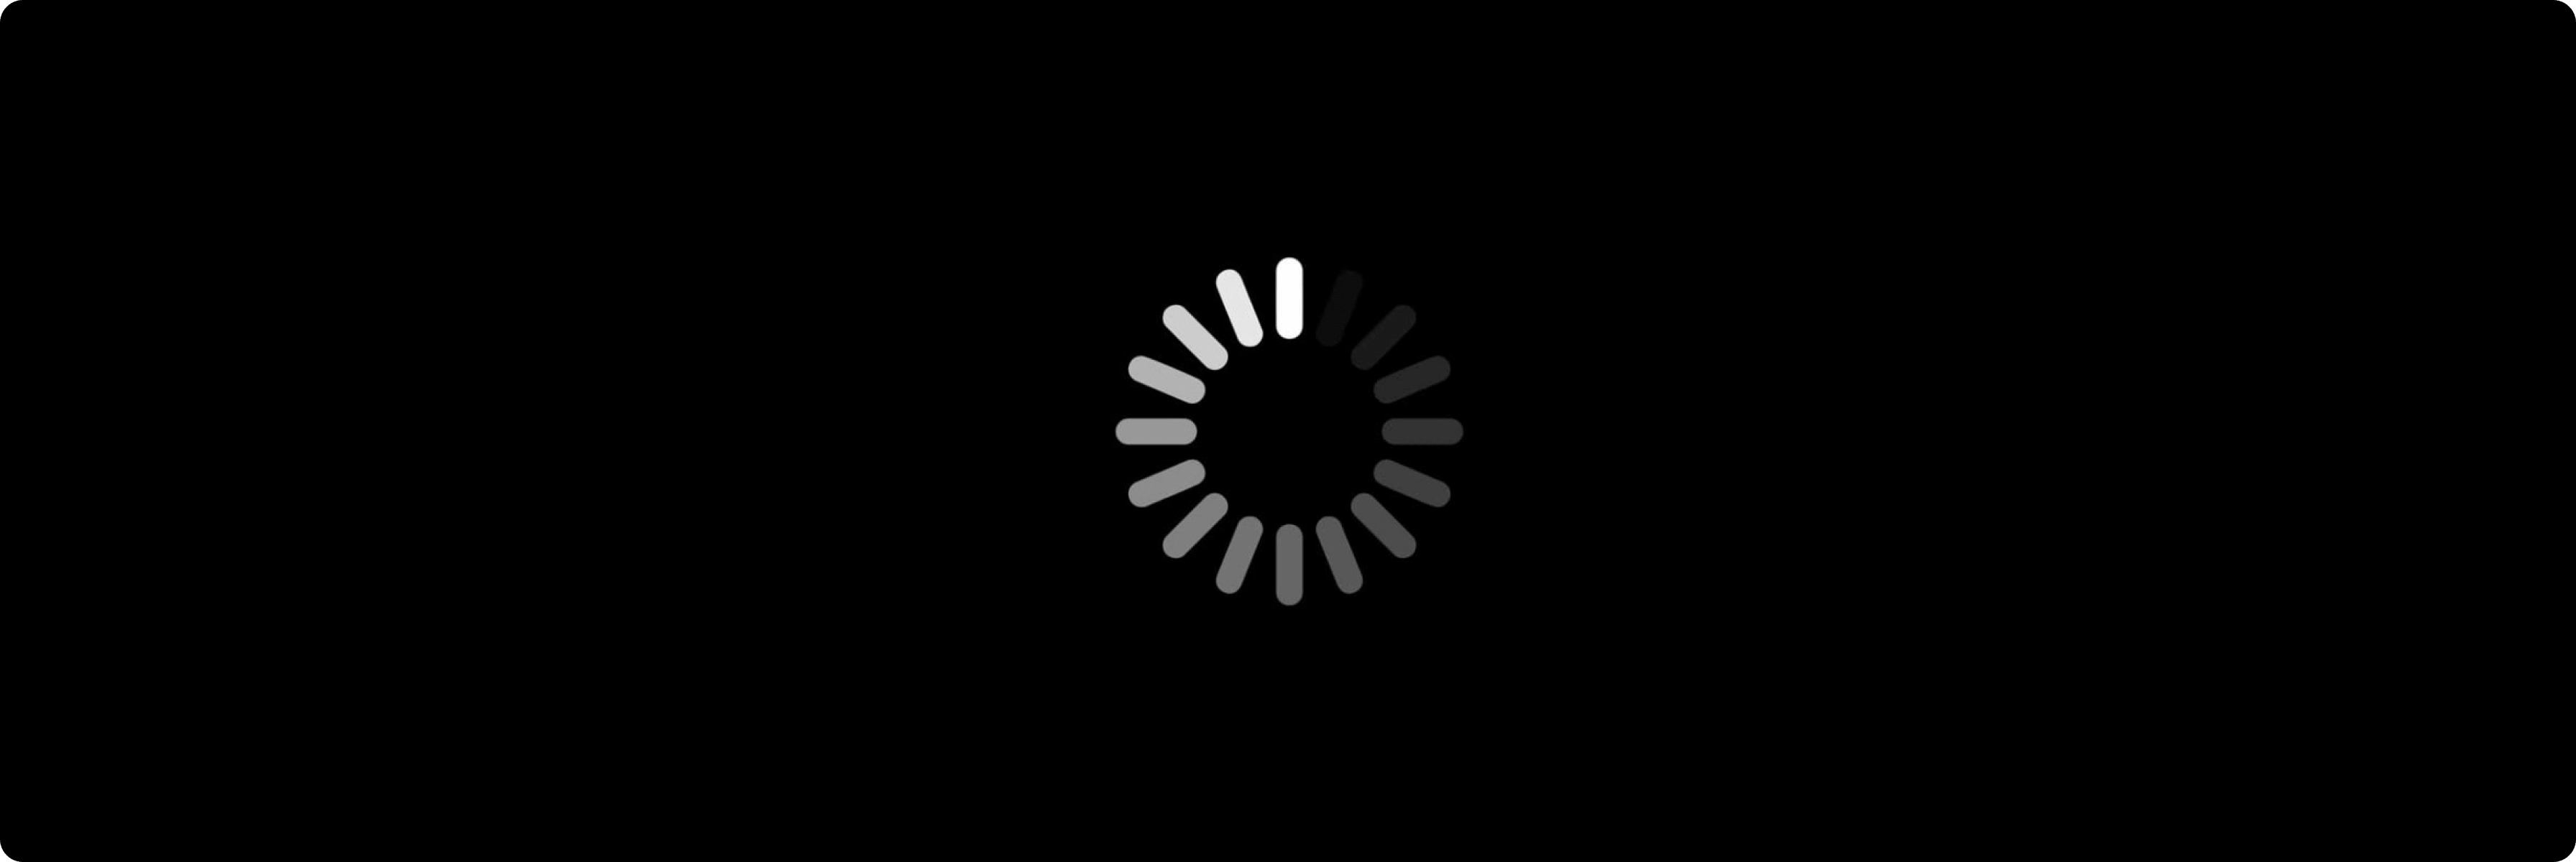 Screen loading icon 